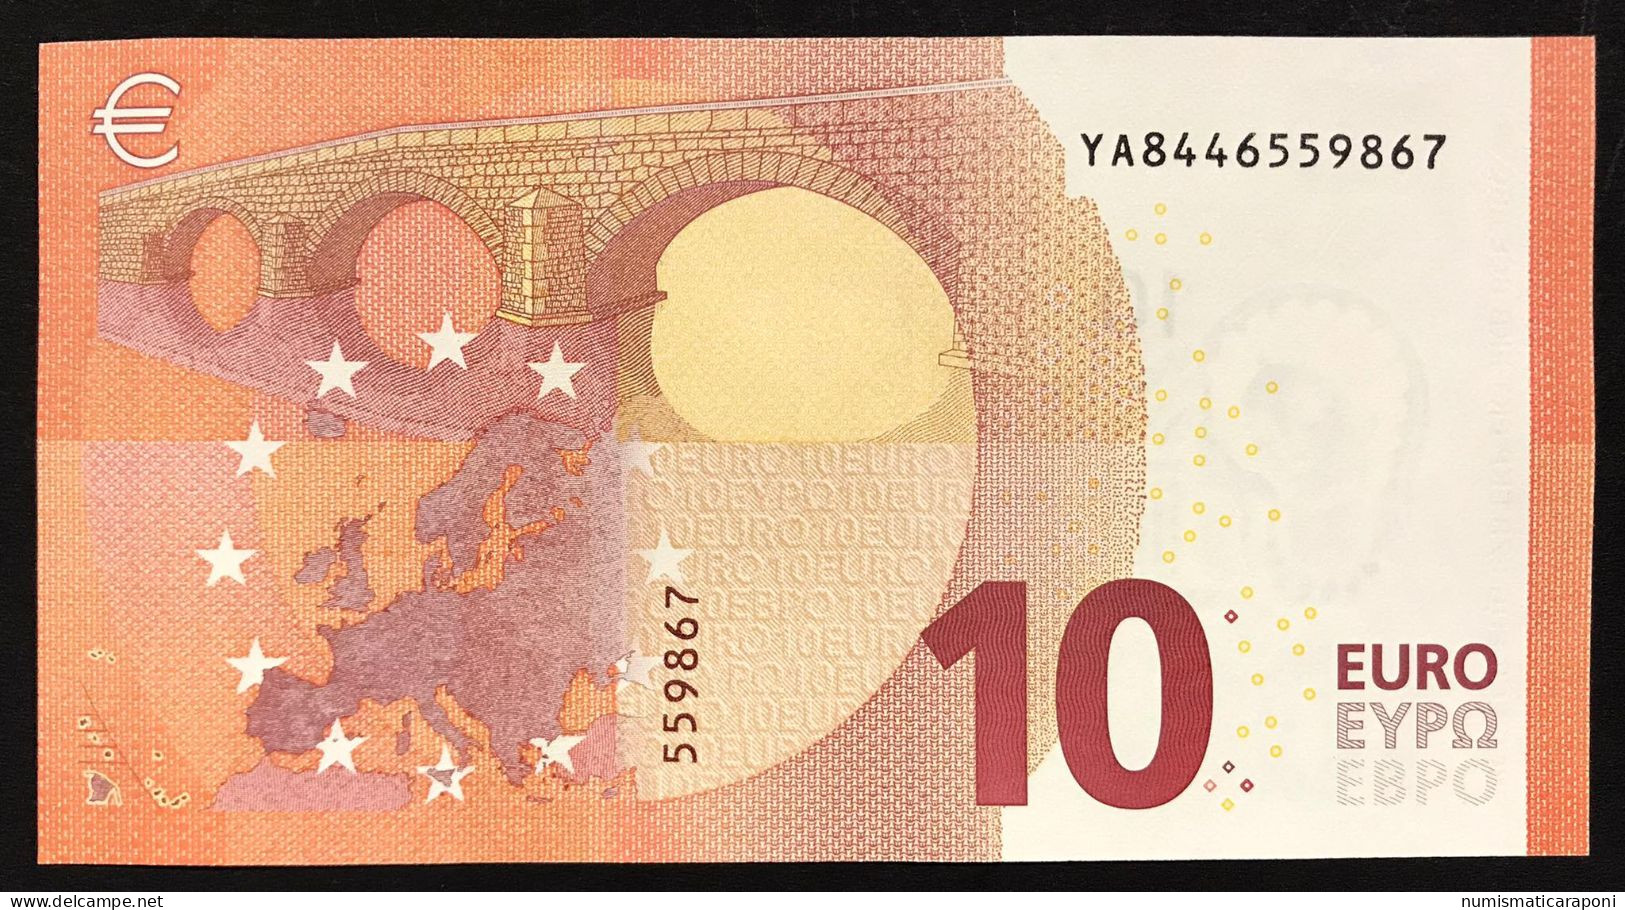 Grecia Greece 10 € YA Lagarde Y012H5 UNC- COD.€.264 - 10 Euro